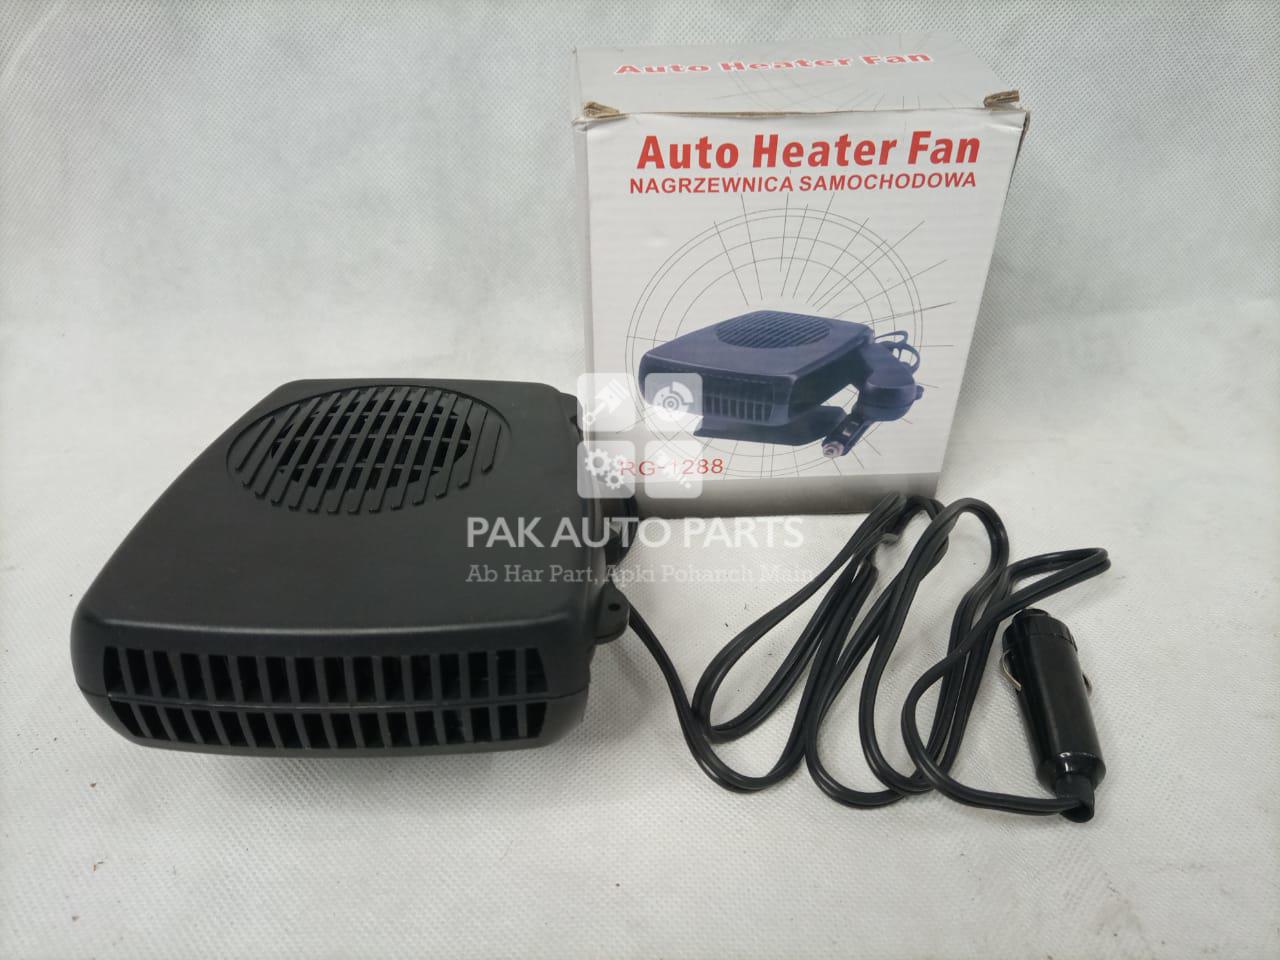 Picture of Car Auto Heater Fan